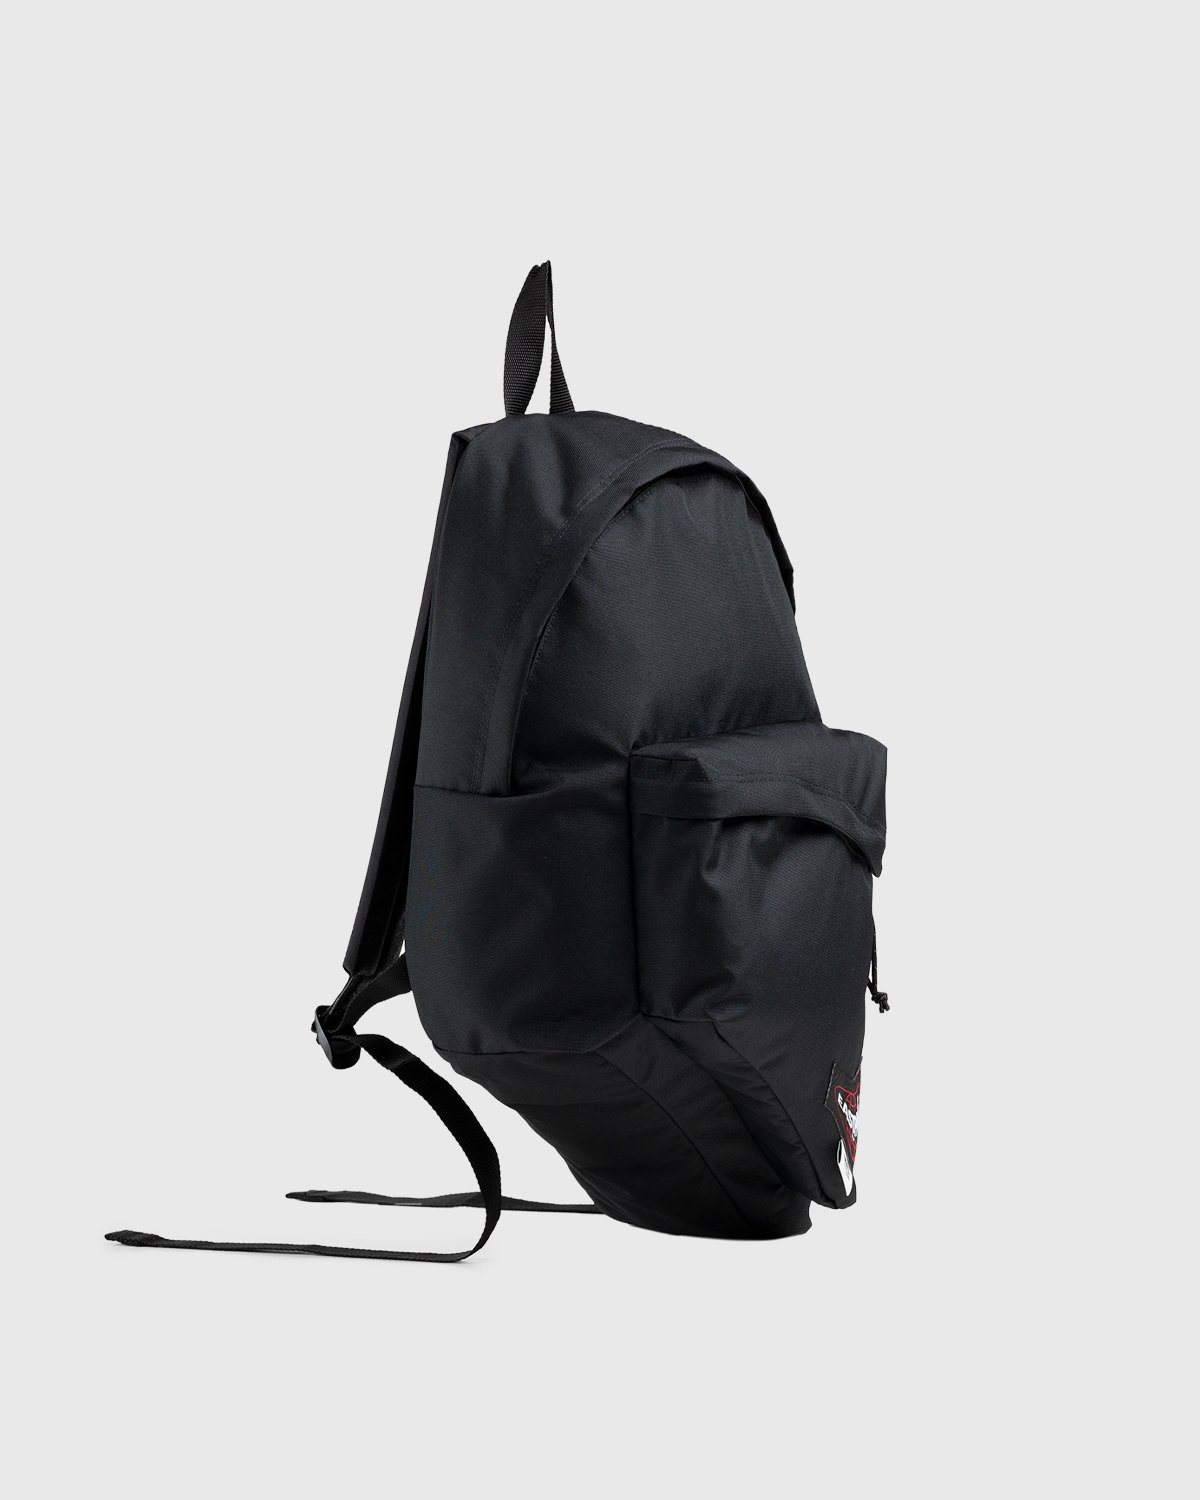 MM6 Maison Margiela x Eastpak - Zaino Backpack Black - Accessories - Black - Image 2